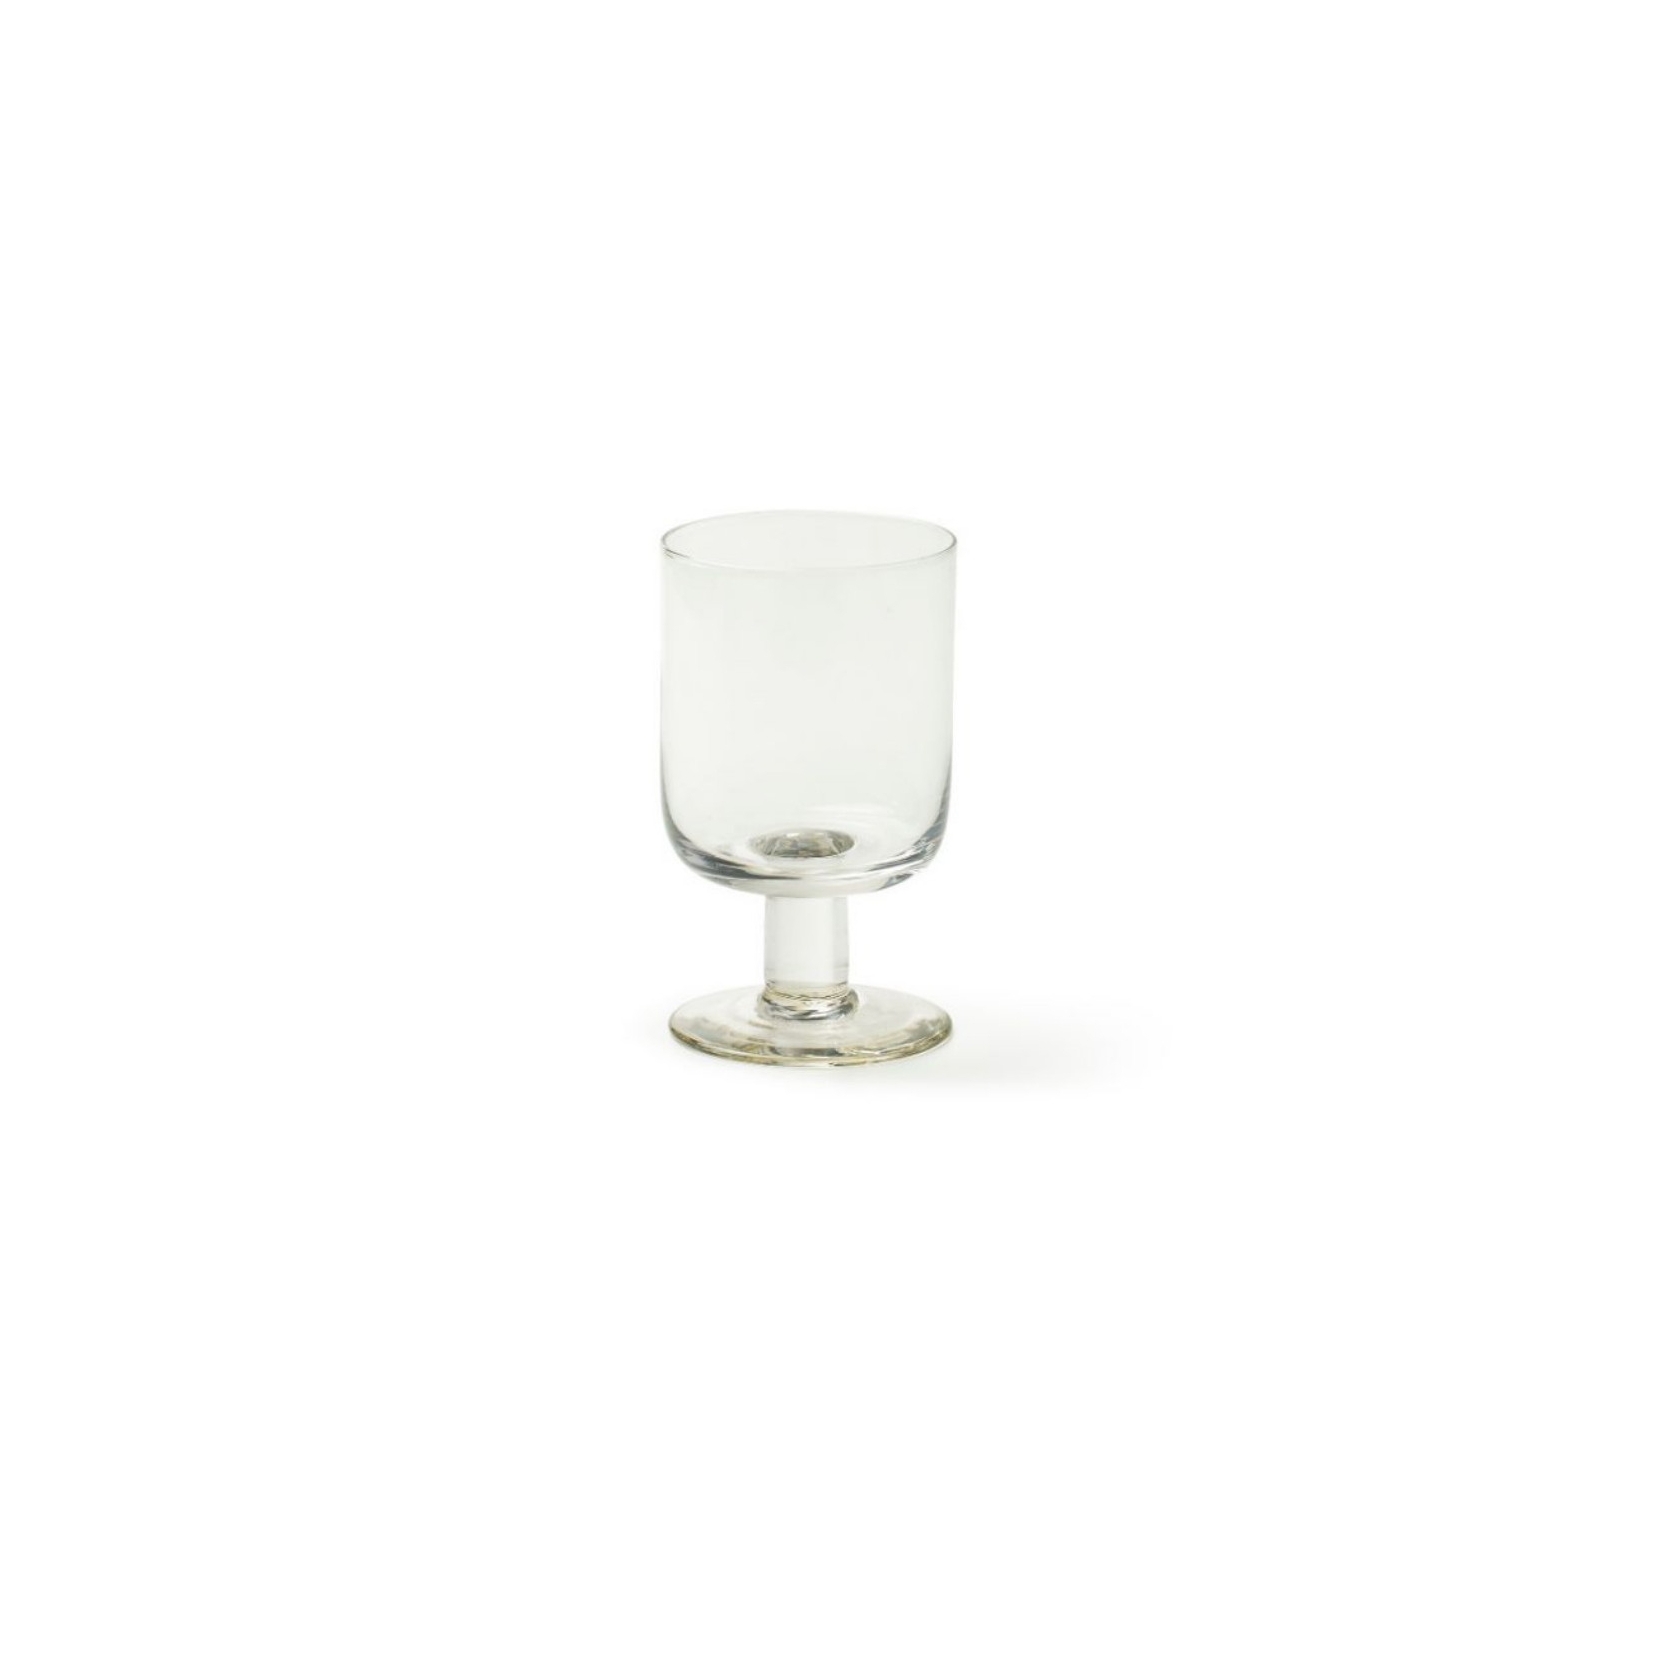 https://www.vinciguerrashop.com/25830-thickbox_default/bitossi-home-set-6-bloom-wine-glasses.jpg